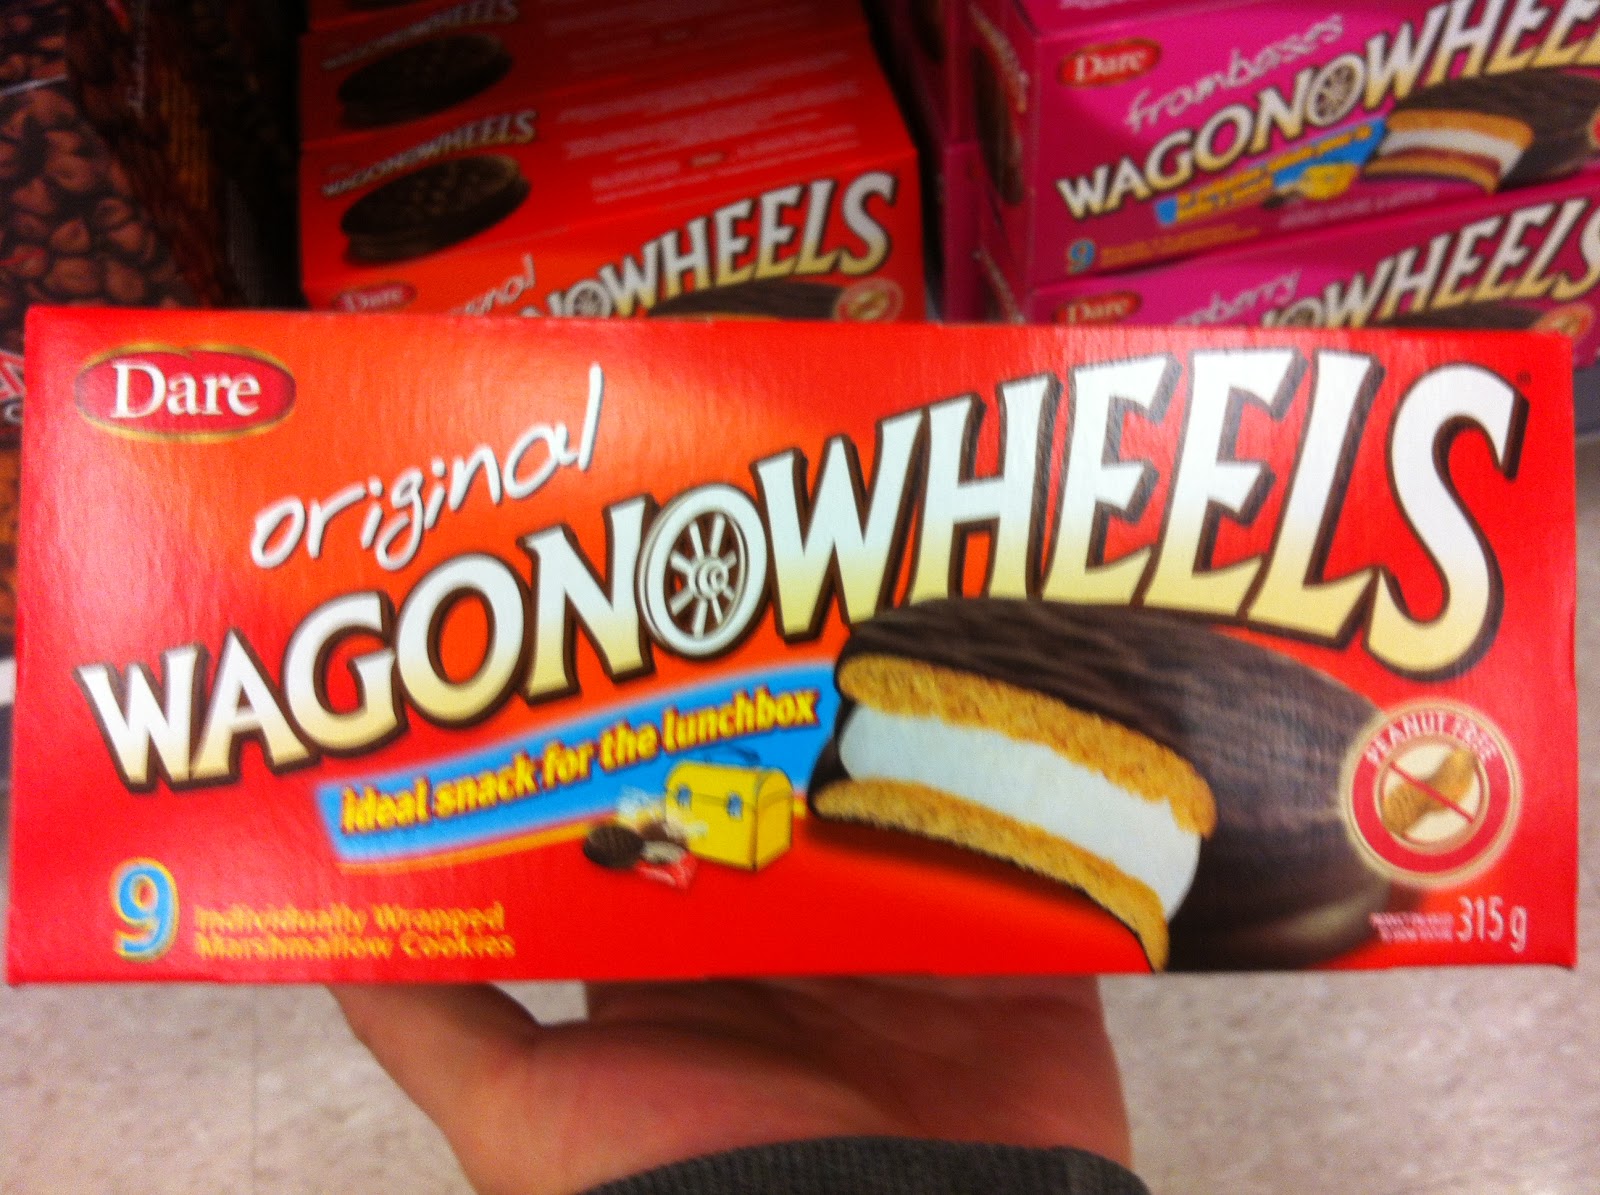 Wagon Wheels Candy The Wagon